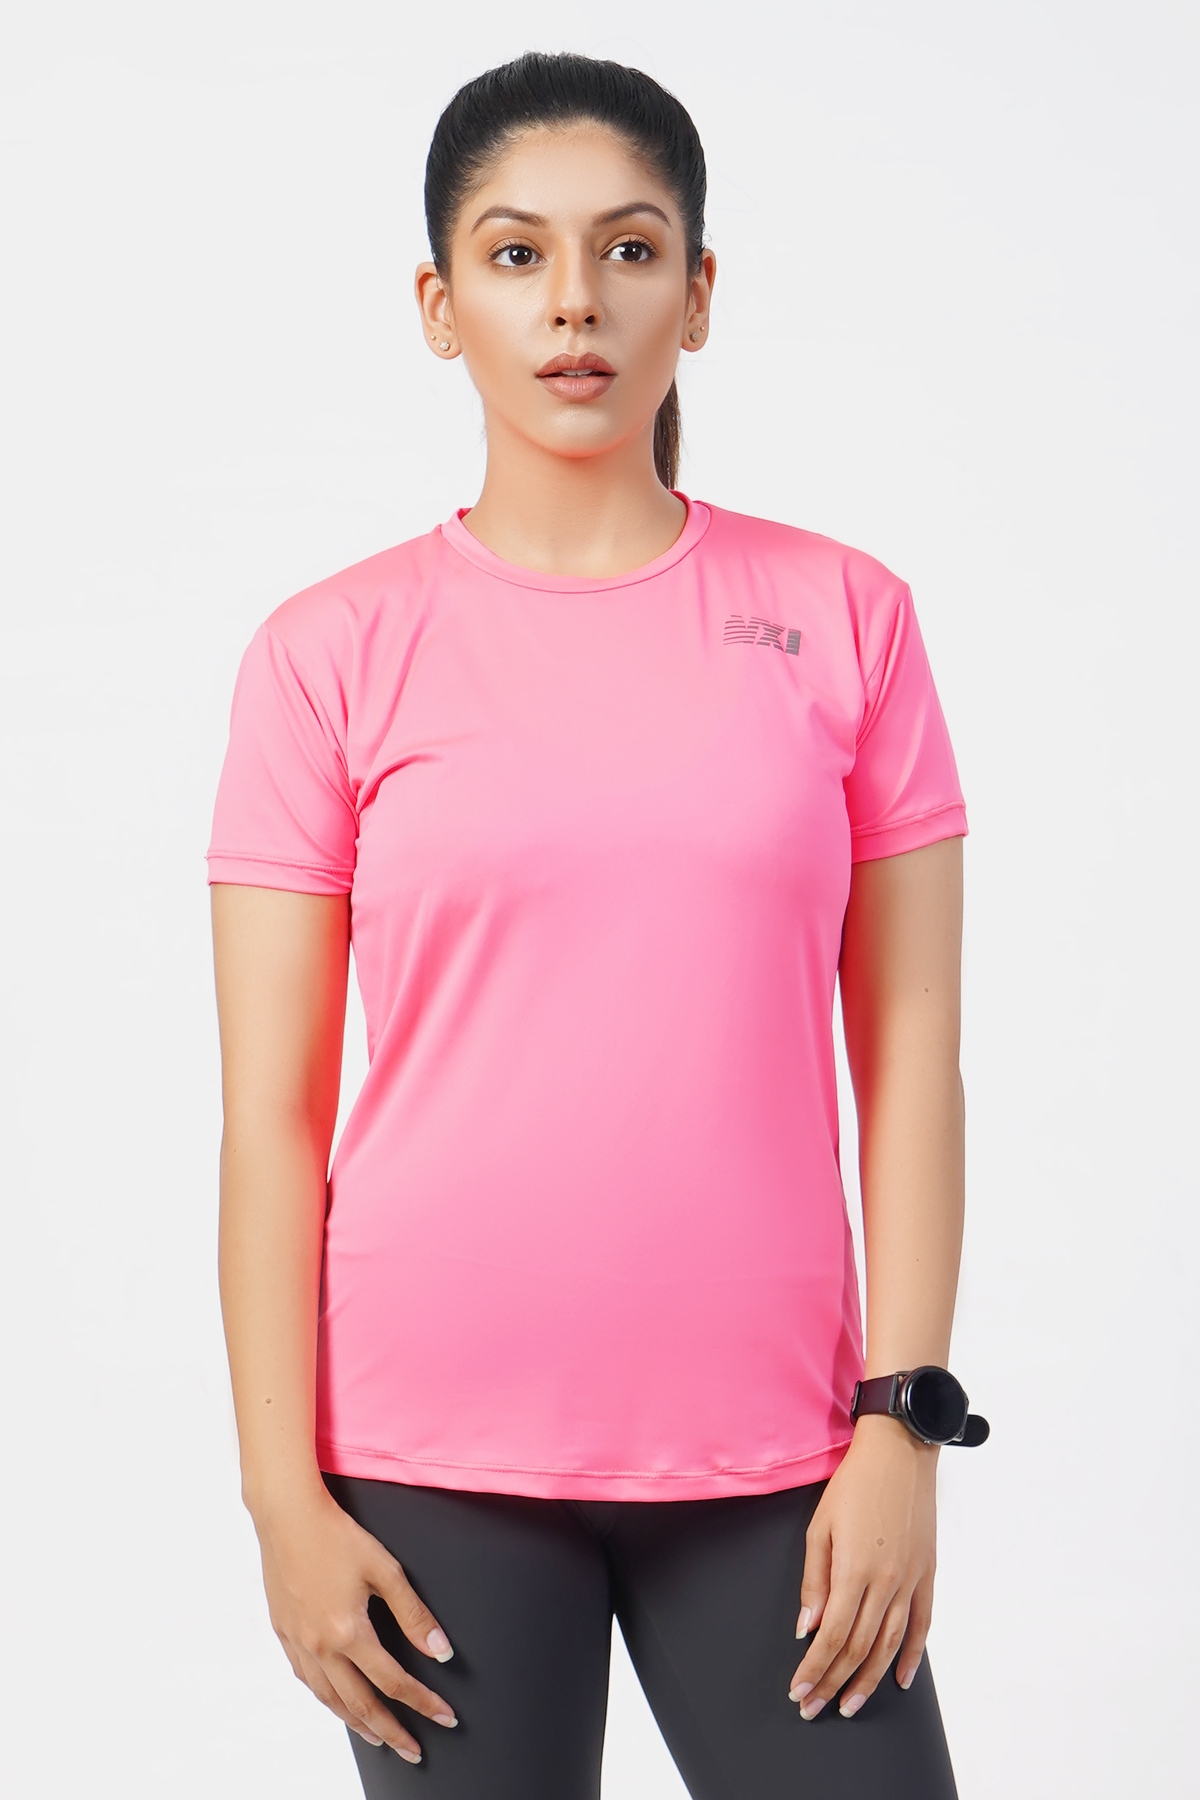 Fizz Pink T-Shirt for women Workouts